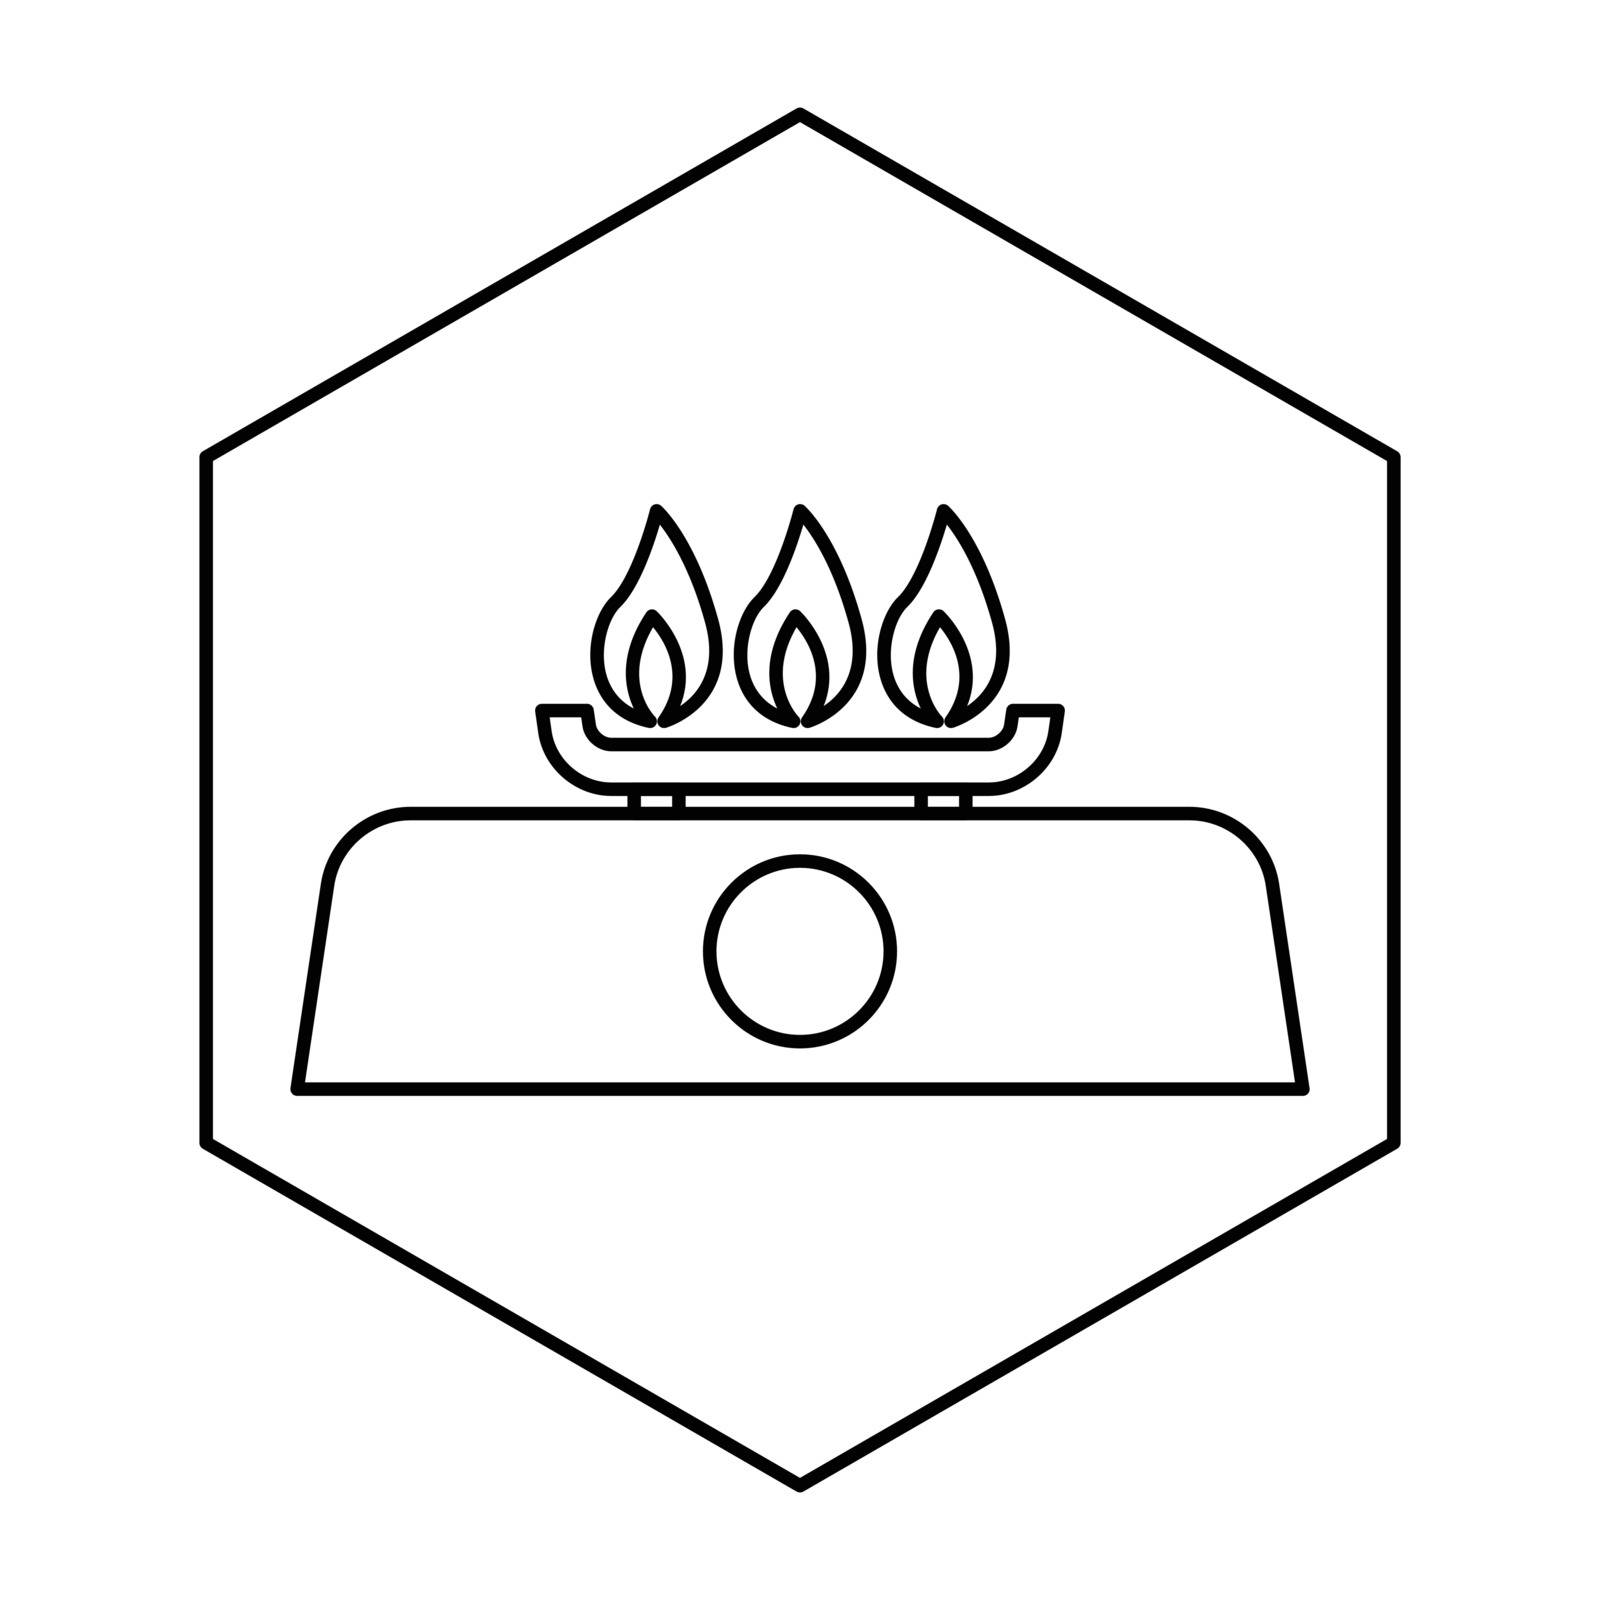 Thin line stove icon by ang_bay